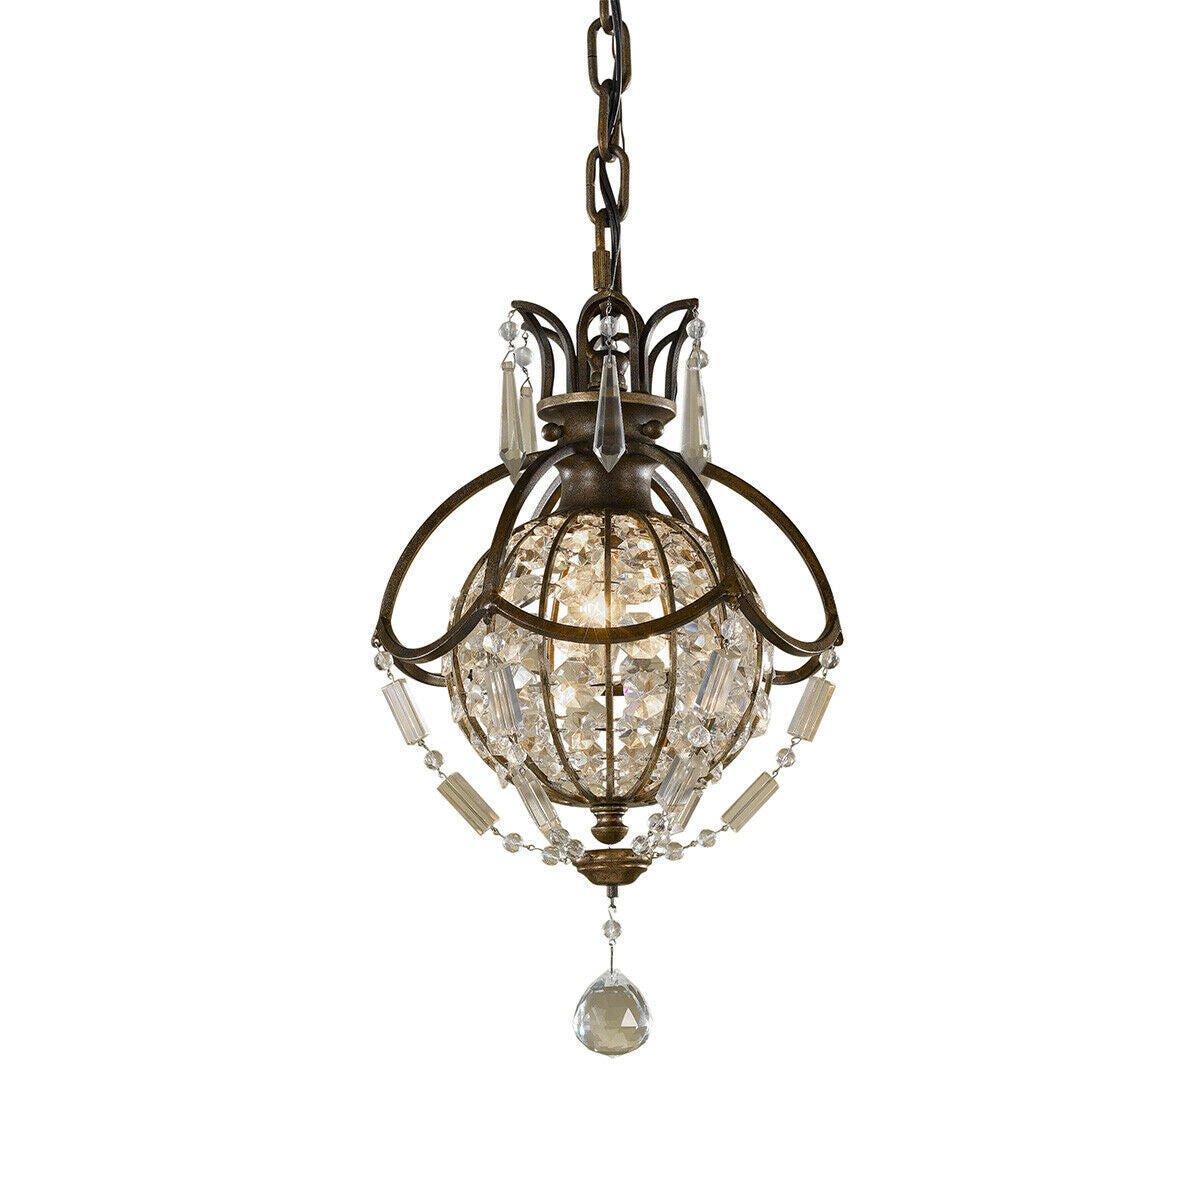 1 Bulb Ceiling Pendant Light Fitting Oxidized Bronze British Bronze LED E14 60W